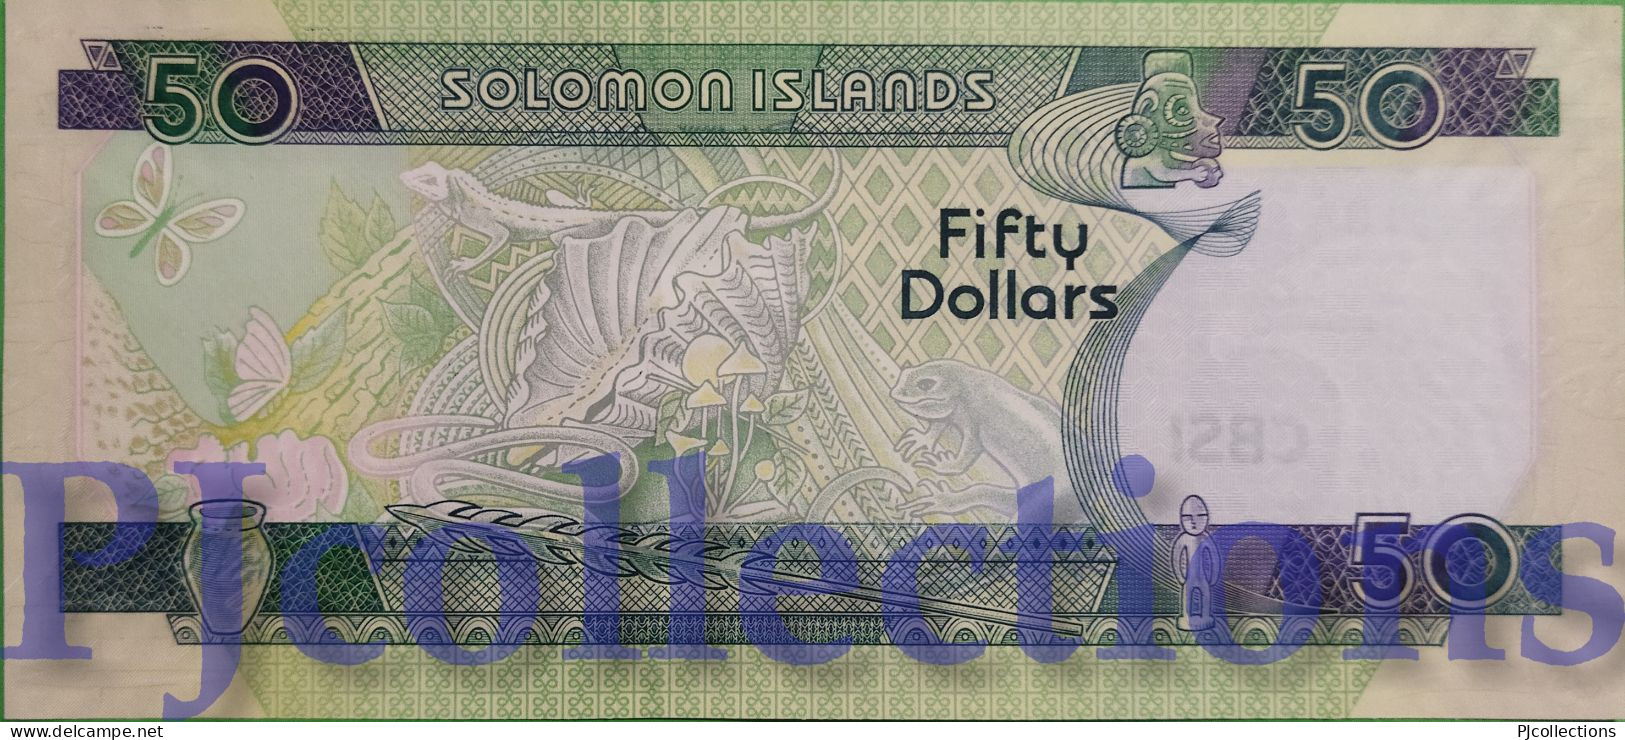 SOLOMON ISLANDS 50 DOLLARS 2004 PICK 29 UNC LOW SERIAL NUMBER "A/1 001038" - Salomonseilanden